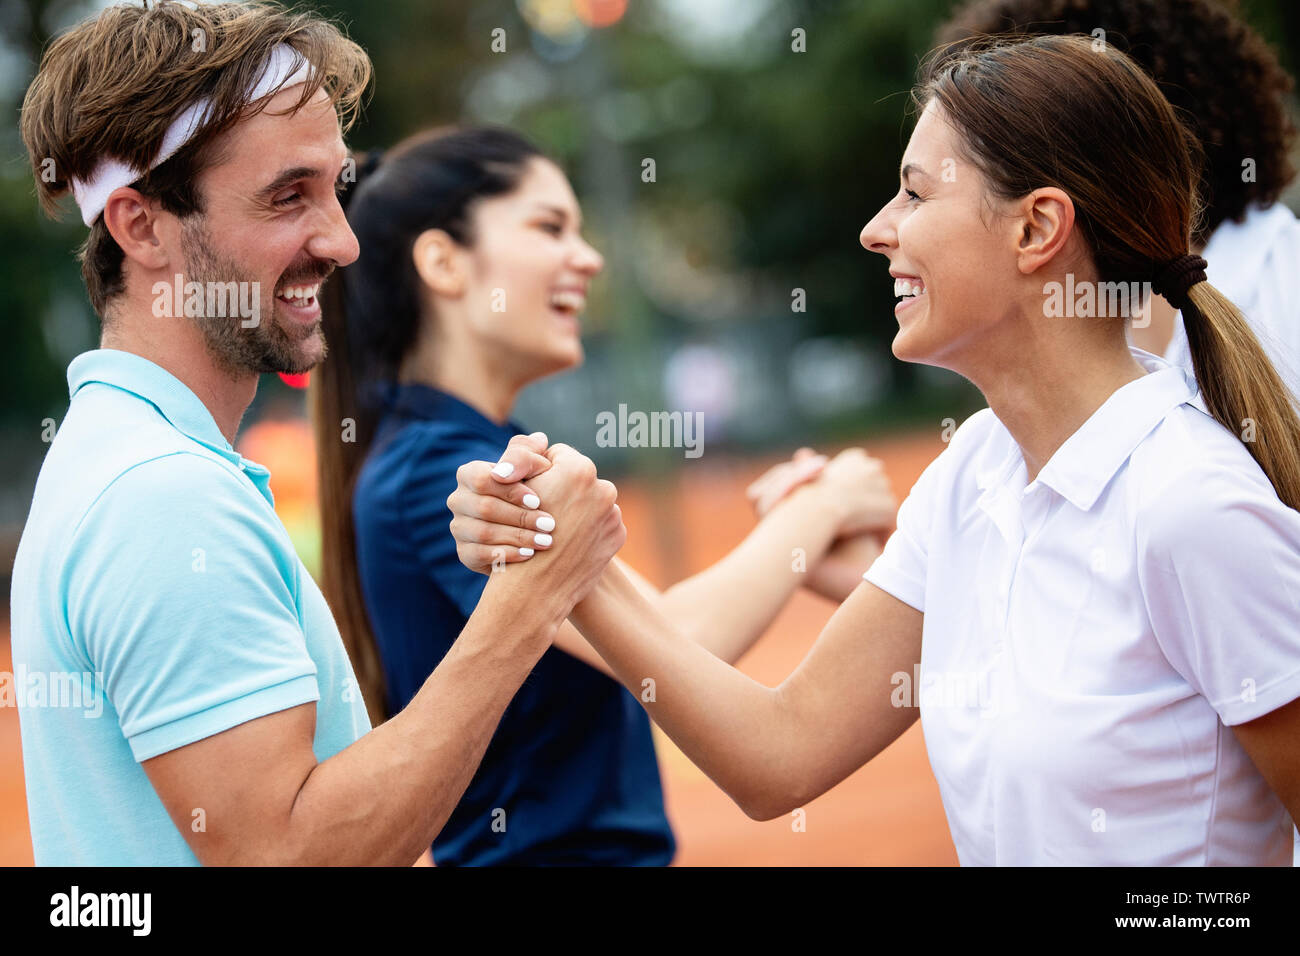 Montare felice la gente giocando a tennis insieme. Sport concept Foto Stock